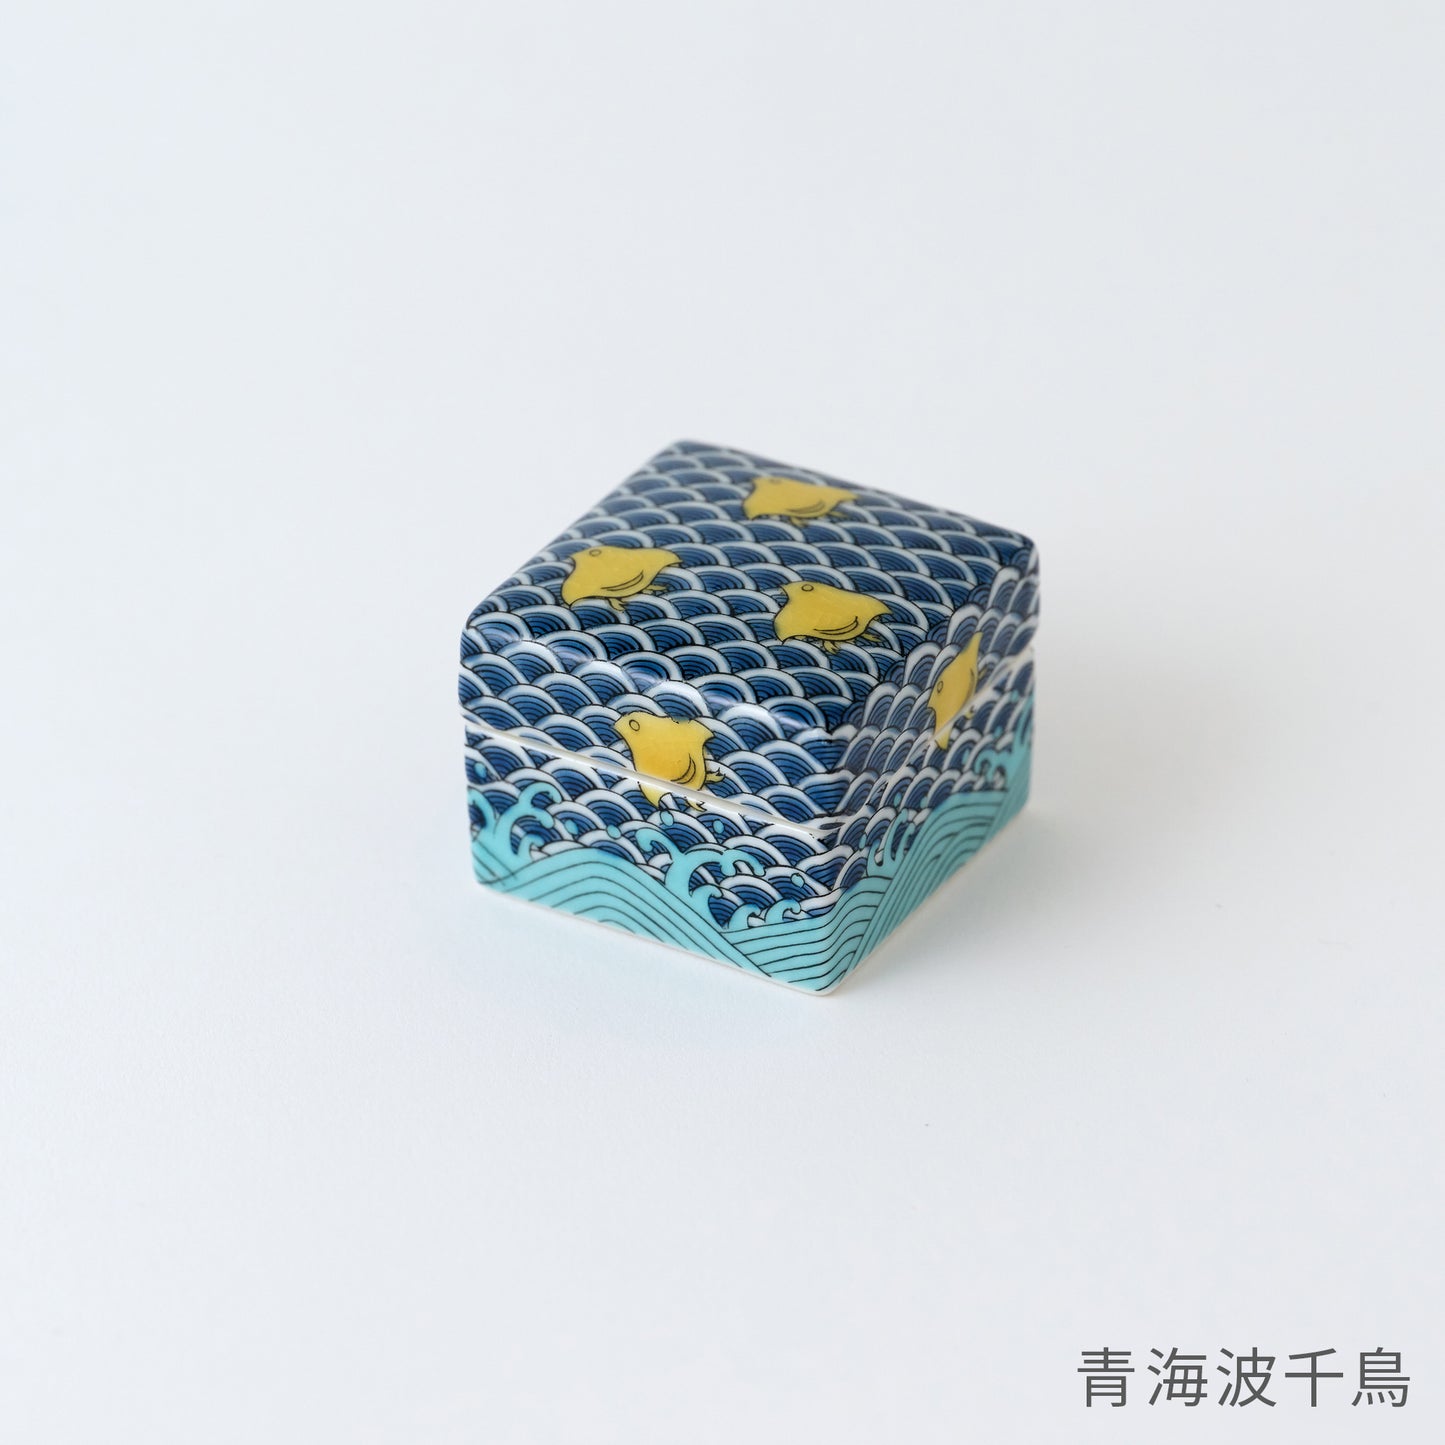 【g-cube×九谷焼香箱セット】 － まてーれオリジナル